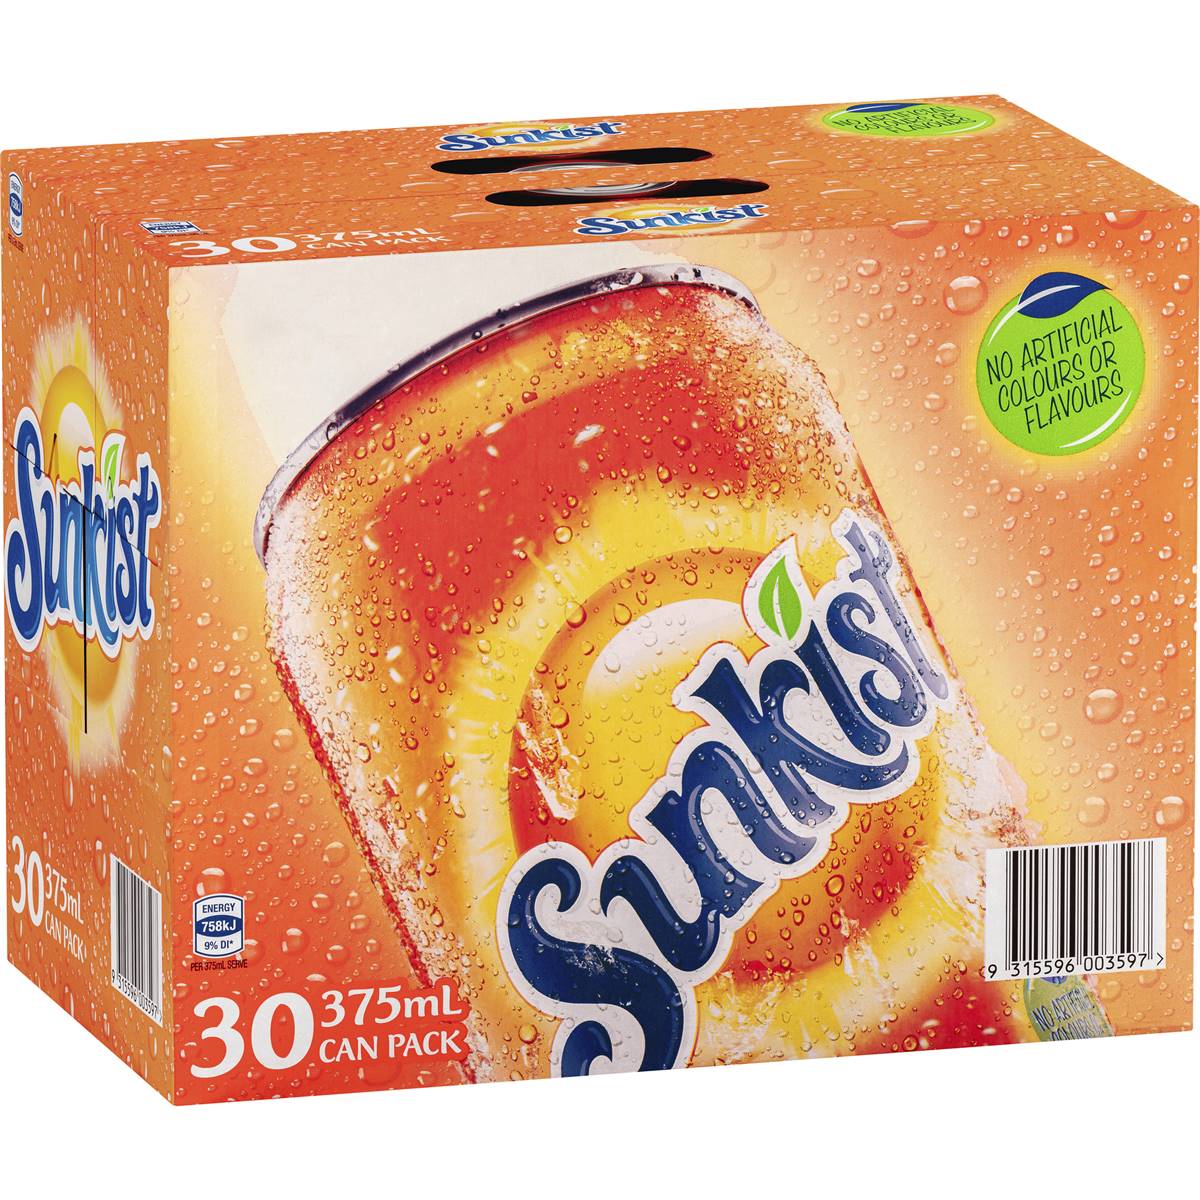 Calories in Sunkist Orange Cans